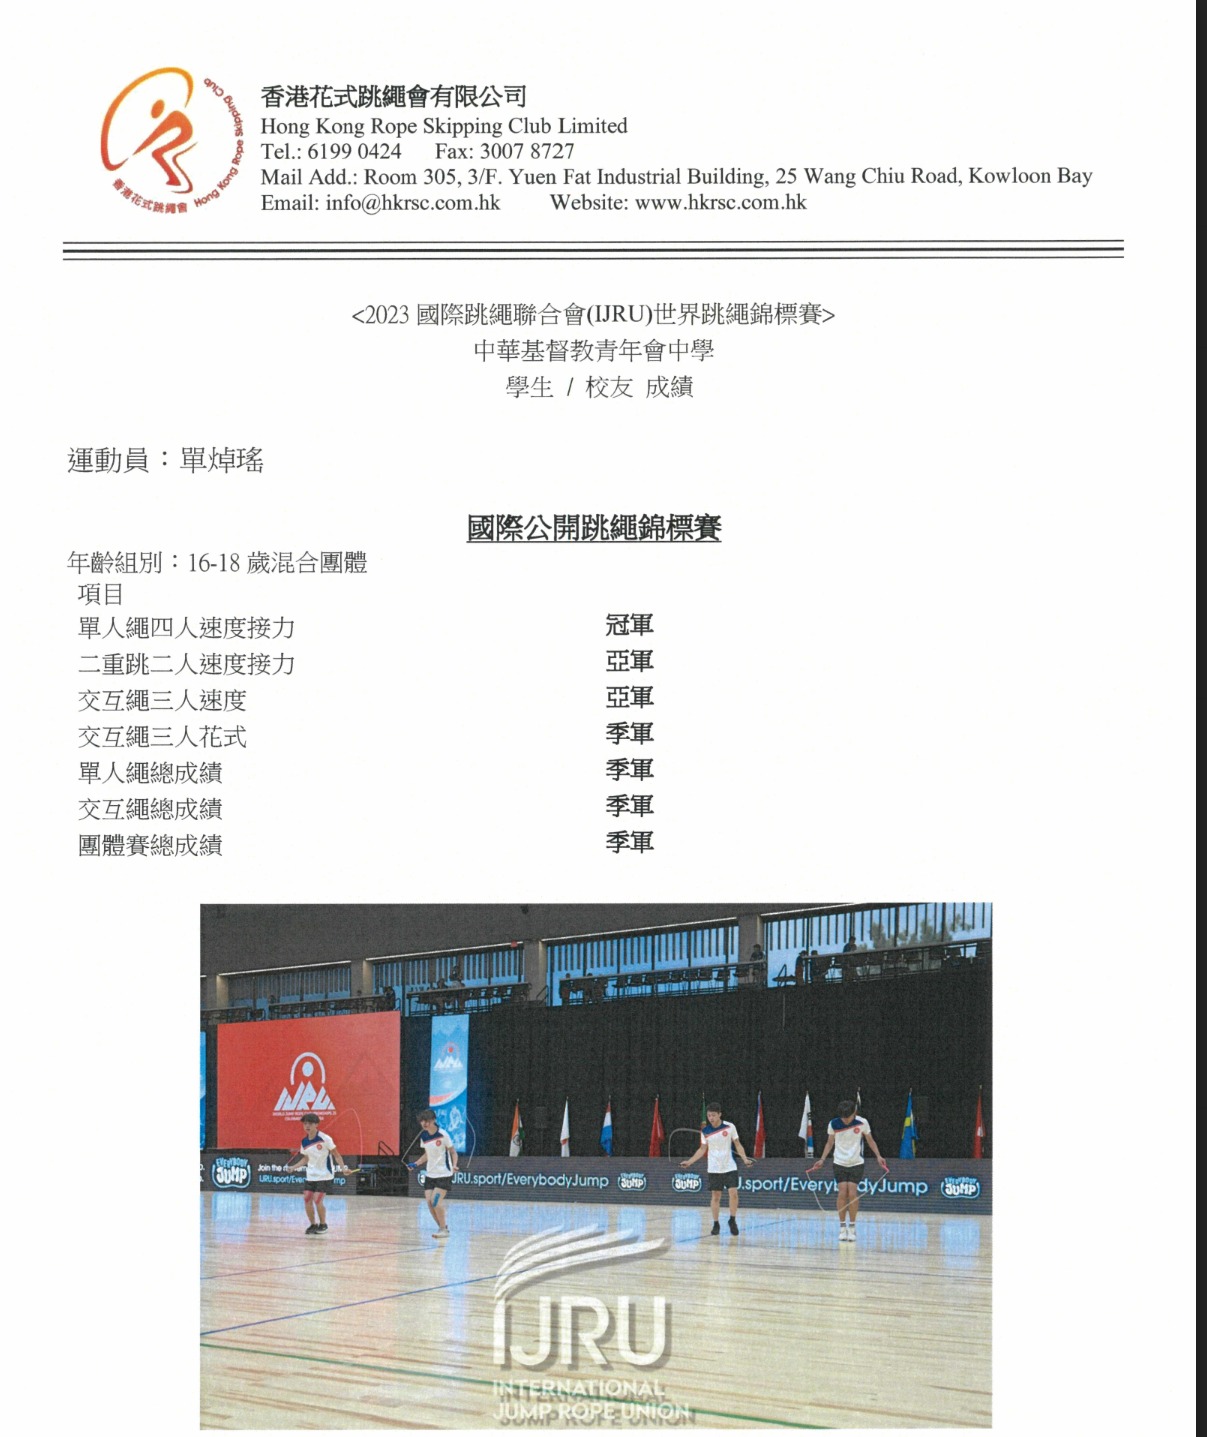 Sin Cheuk Yiu ((Hong Kong Team member) achieved awards at the World Rope Skipping Championships 2023